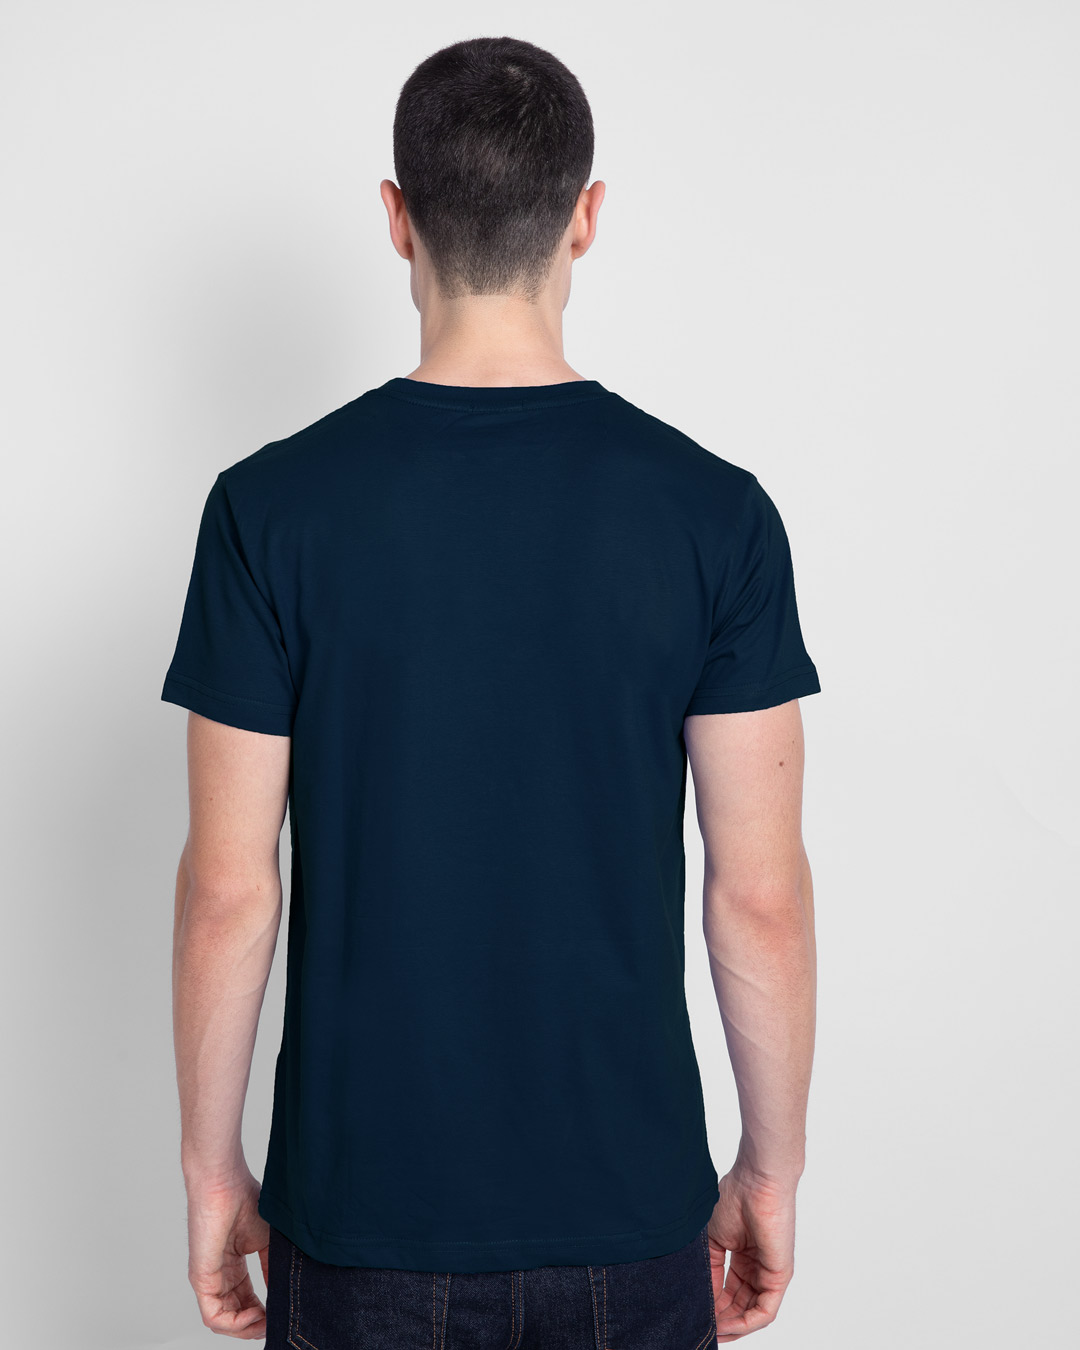 Shop Protect Home Half Sleeve T-Shirt Navy Blue-Back